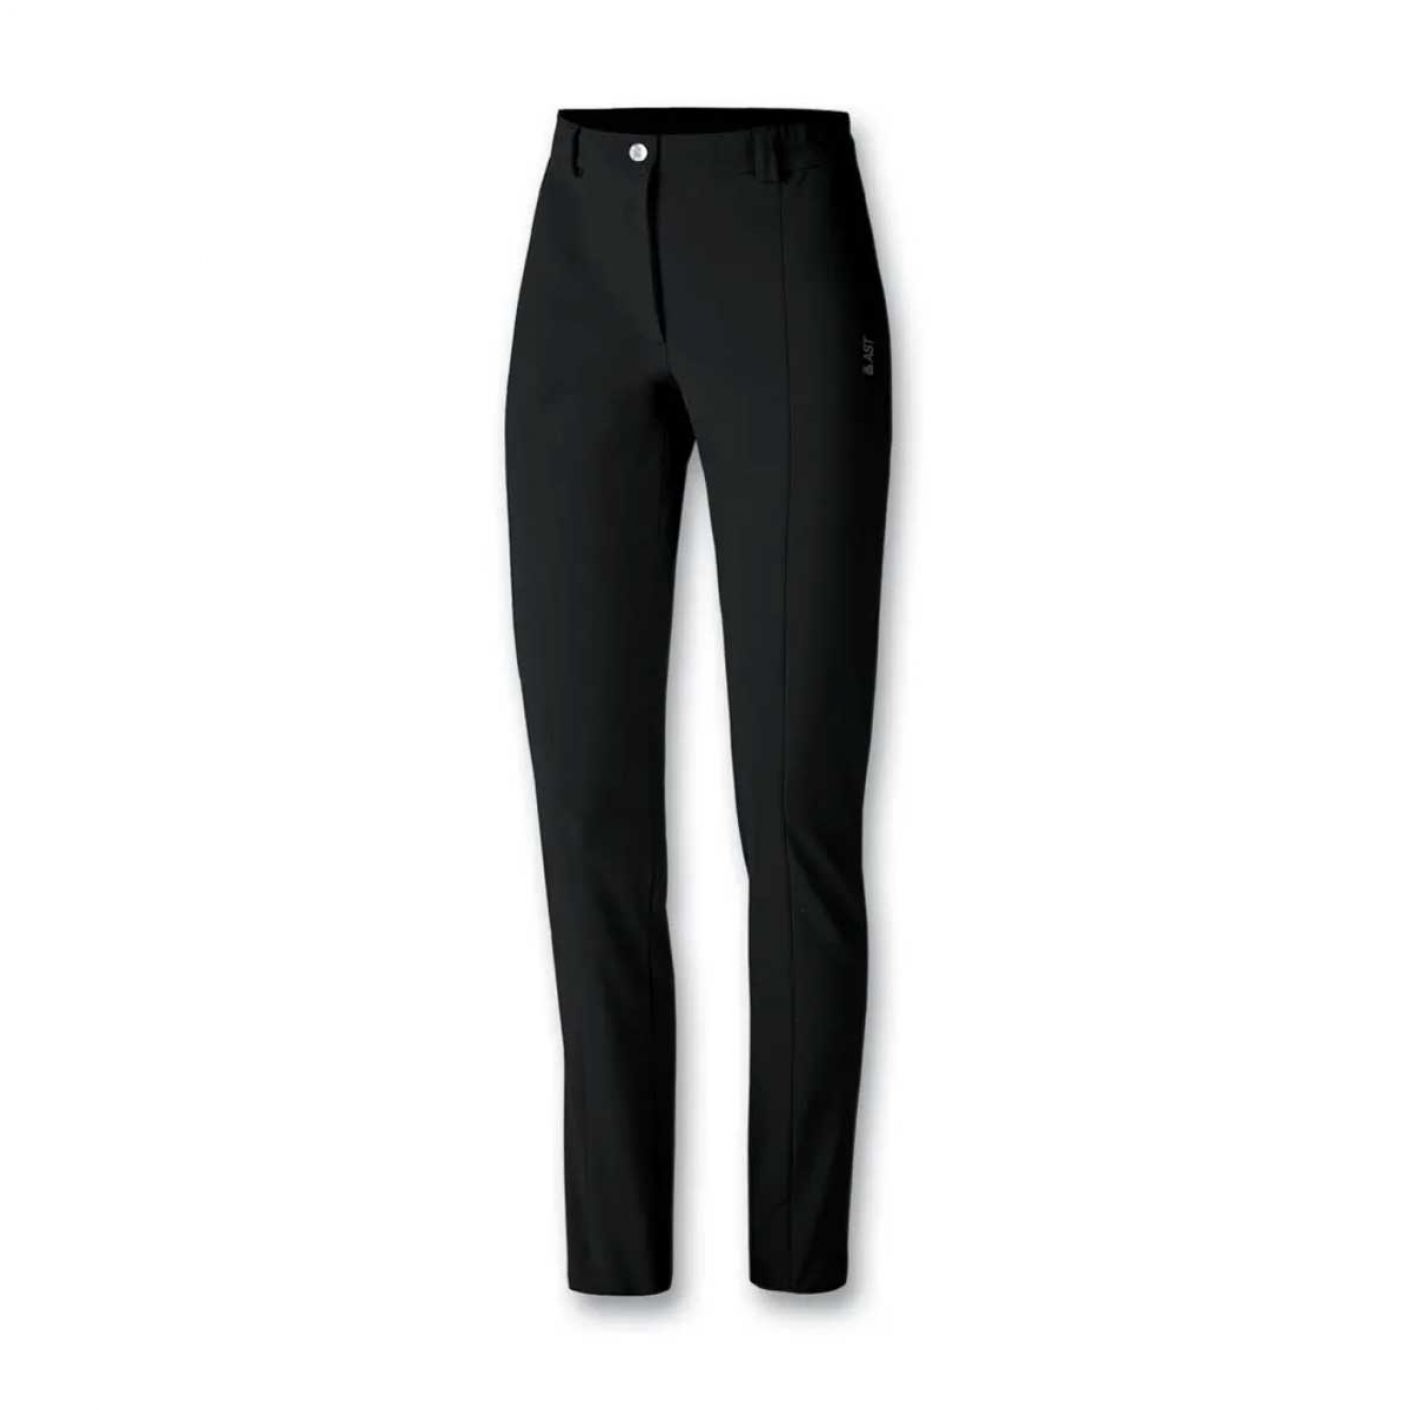 Ast Women's Softshell Ski Pants Black